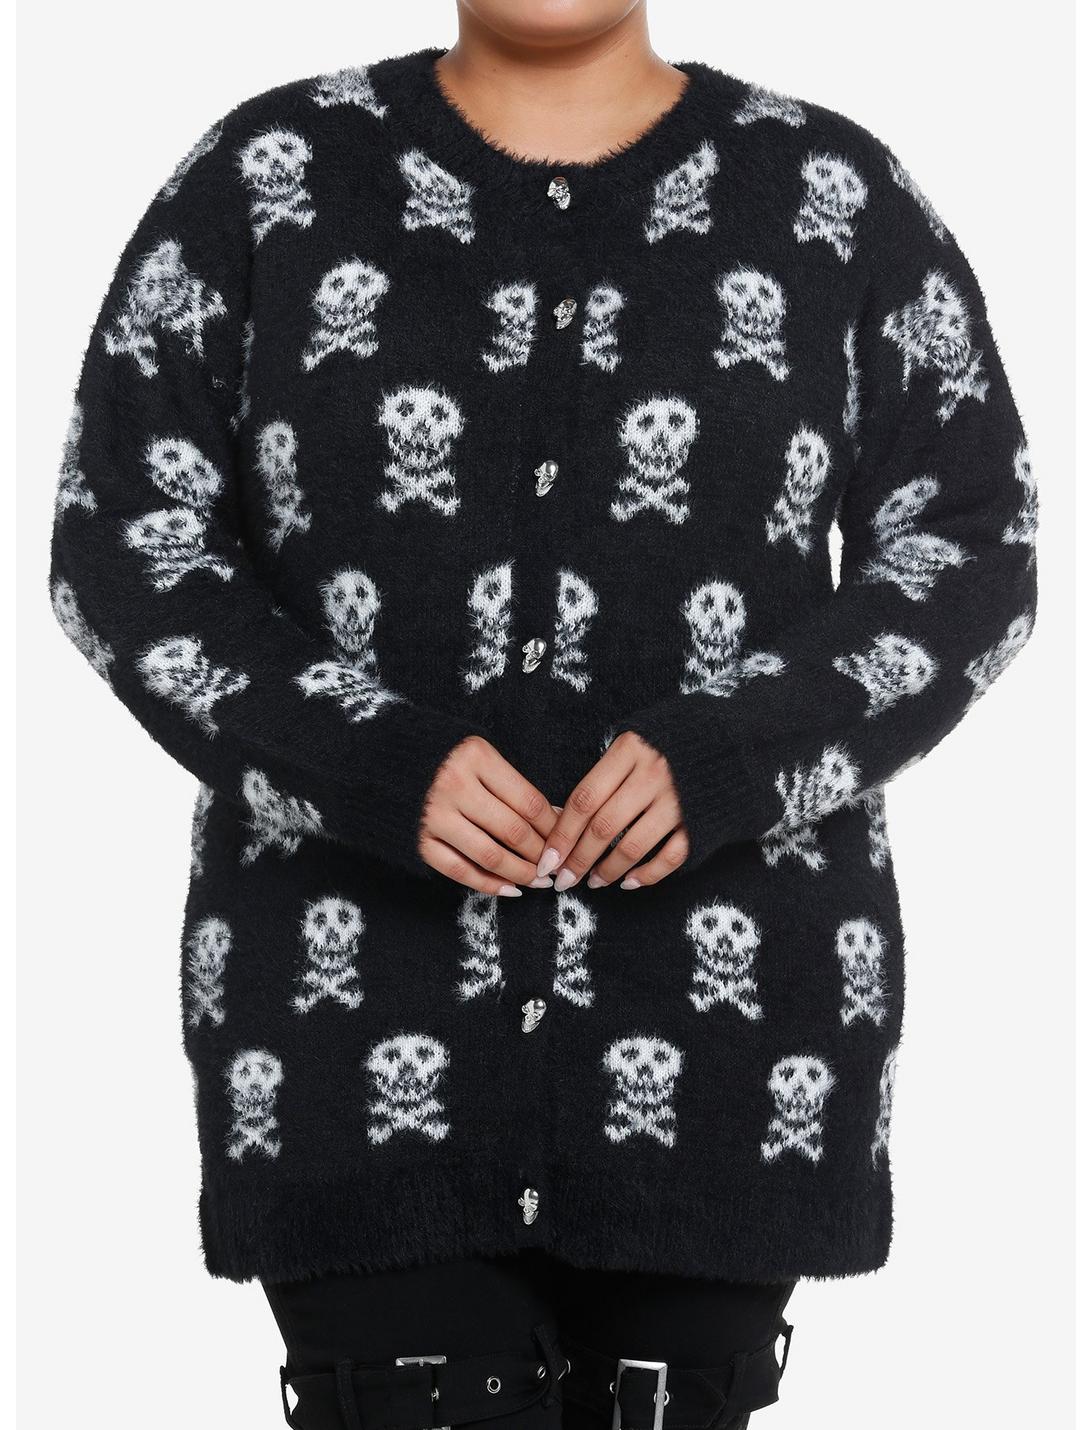 Social Collision Skull & Crossbones Fuzzy Girls Cardigan Plus Size, SKULL, hi-res